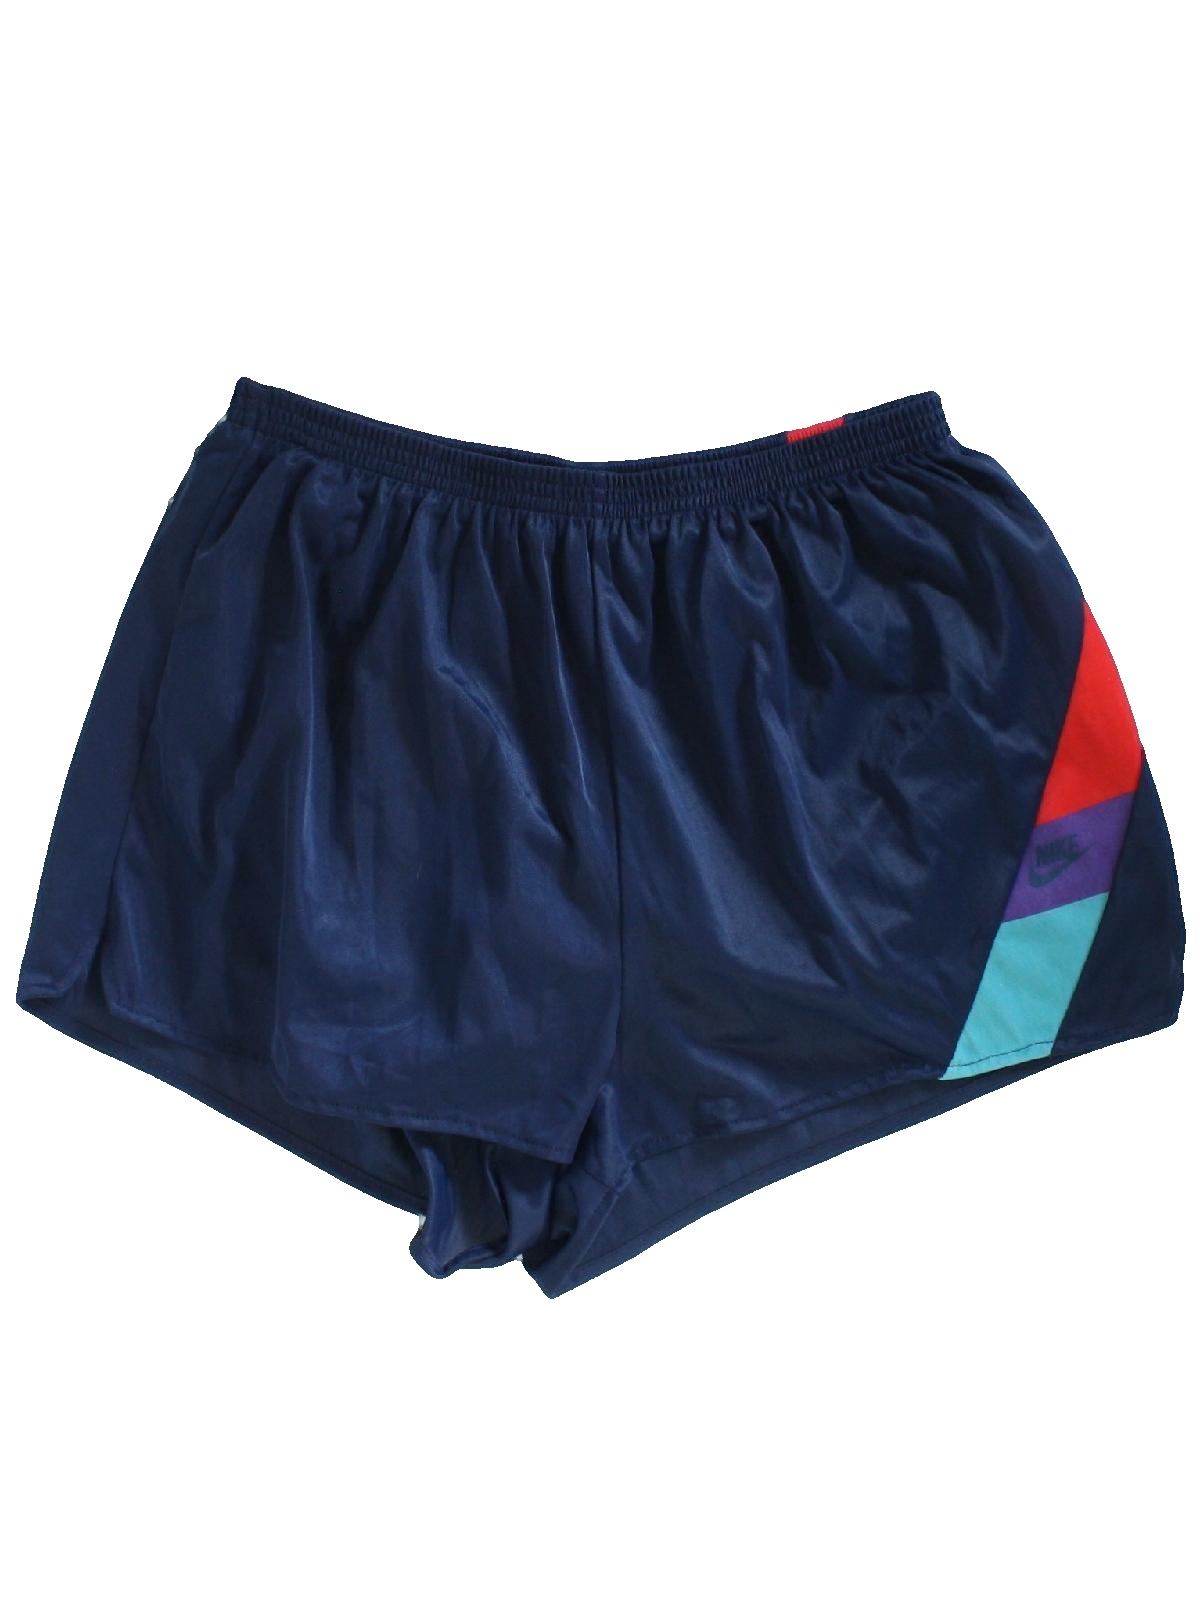 Retro 1980's Shorts (Nike) : 80s -Nike- Mens midnight blue background ...